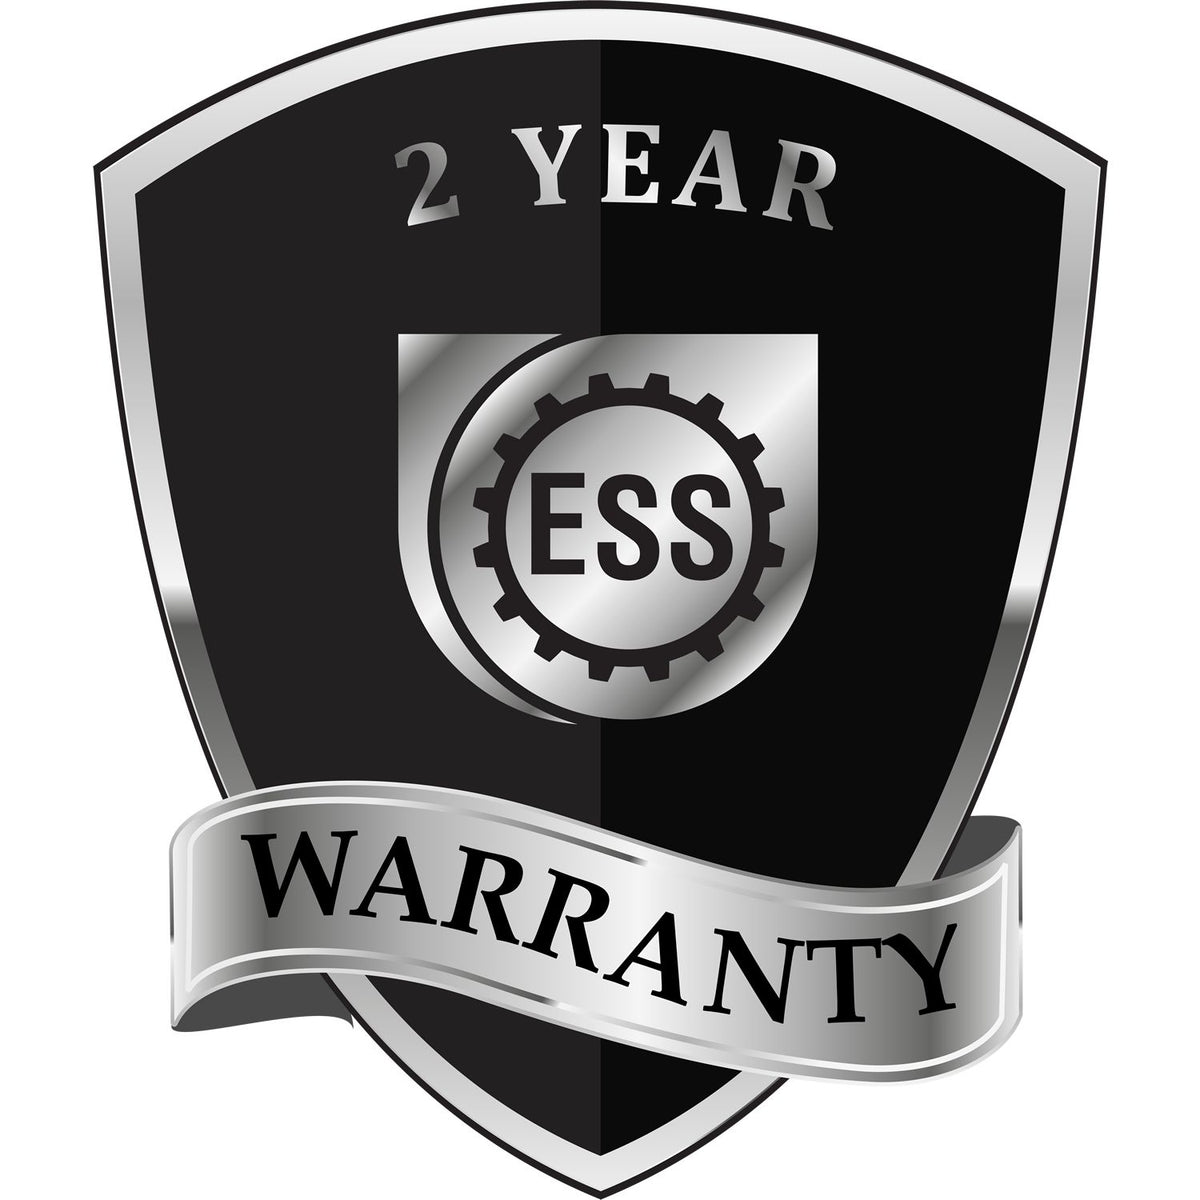 A black and silver badge or emblem showing warranty information for the Hybrid Nebraska Engineer Seal